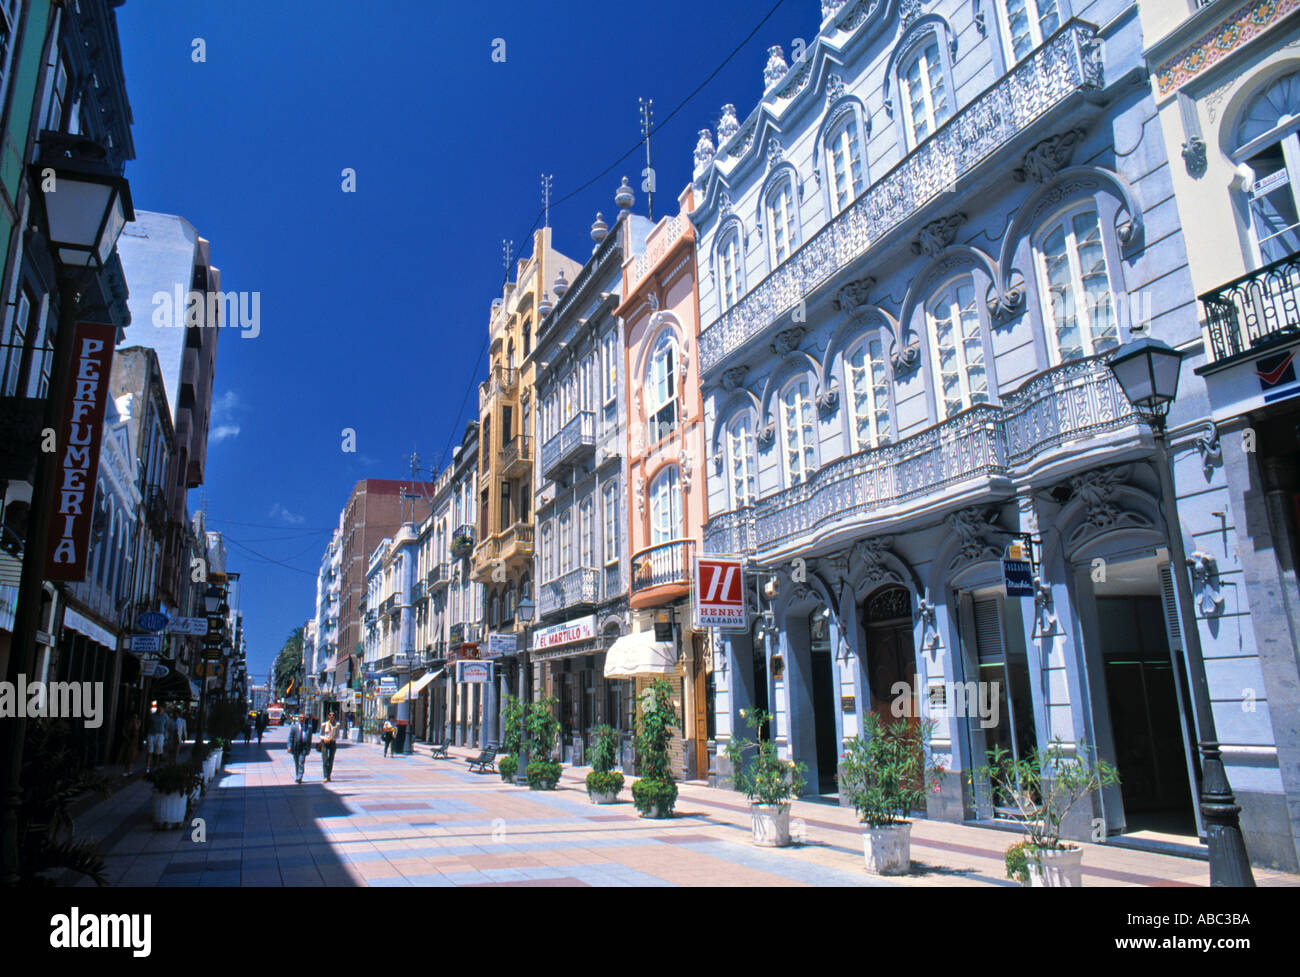 Calle Mayor de Triana, Las Palmas, Gran Canaria, Canary Islands, Spain  Stock Photo - Alamy